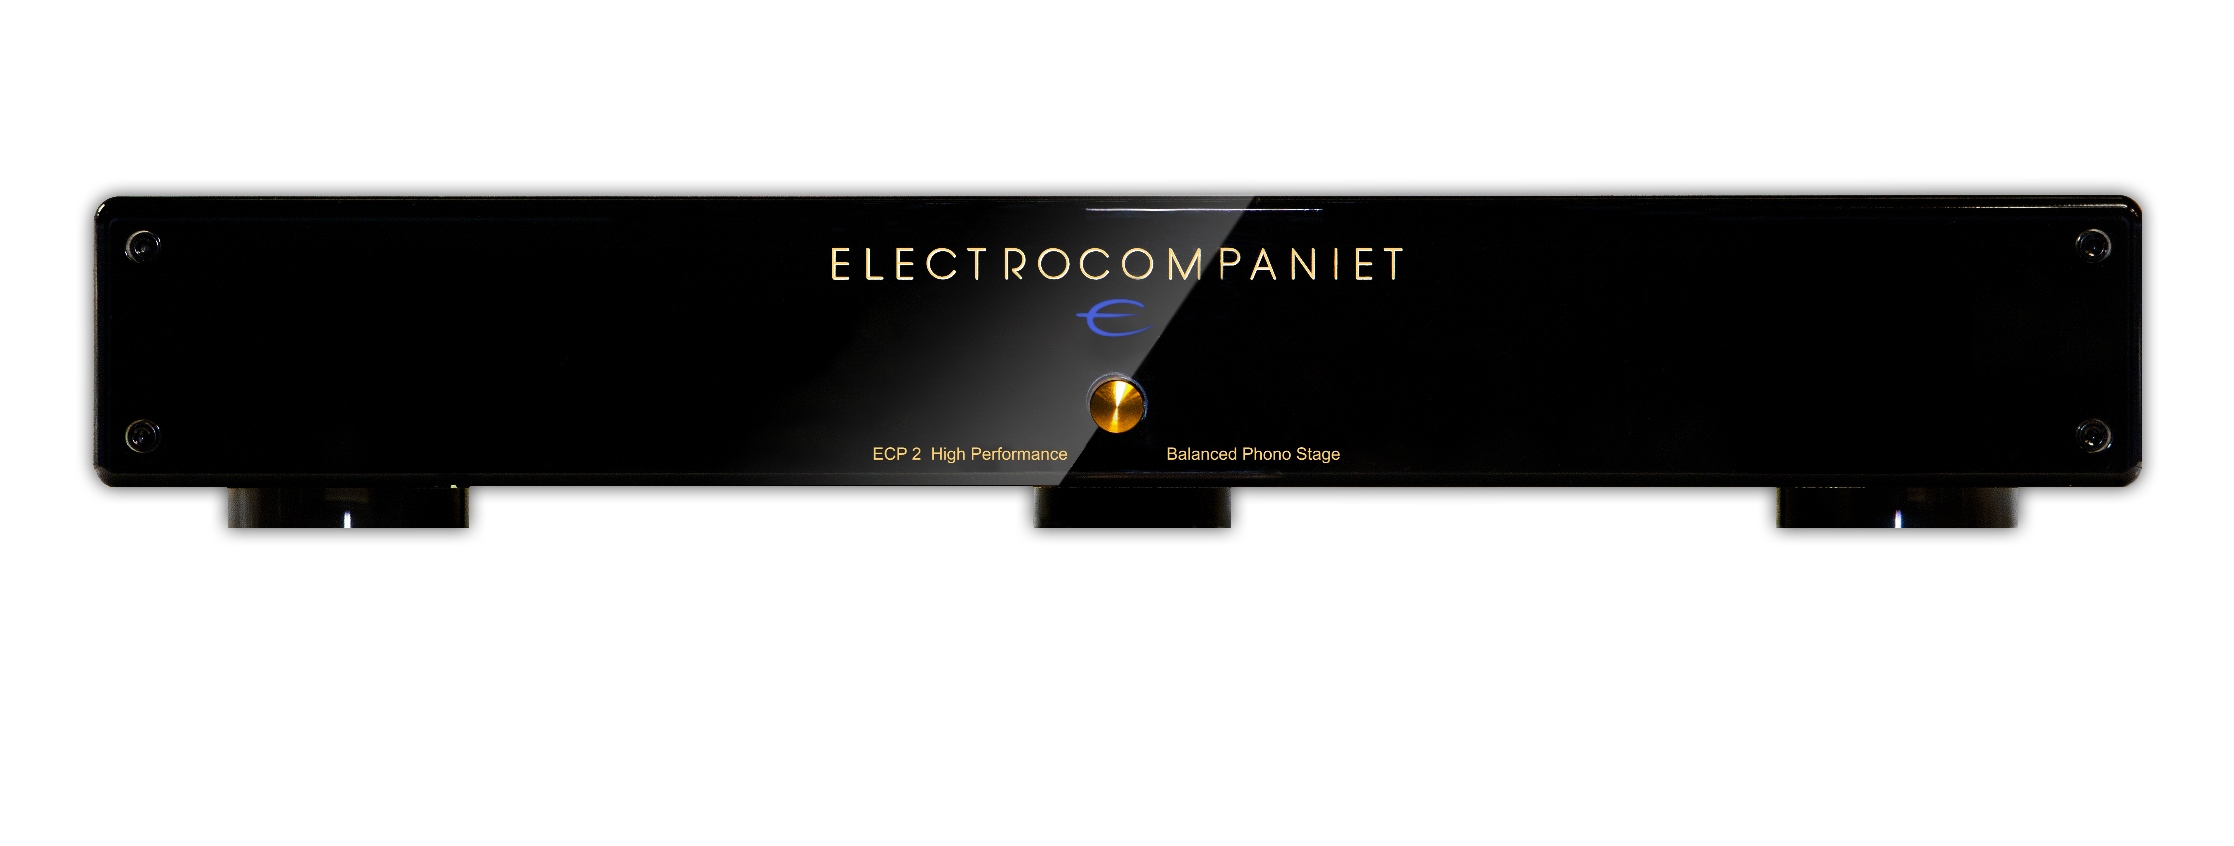 Electrocompaniet ECP-2 in STEREO 9-2015